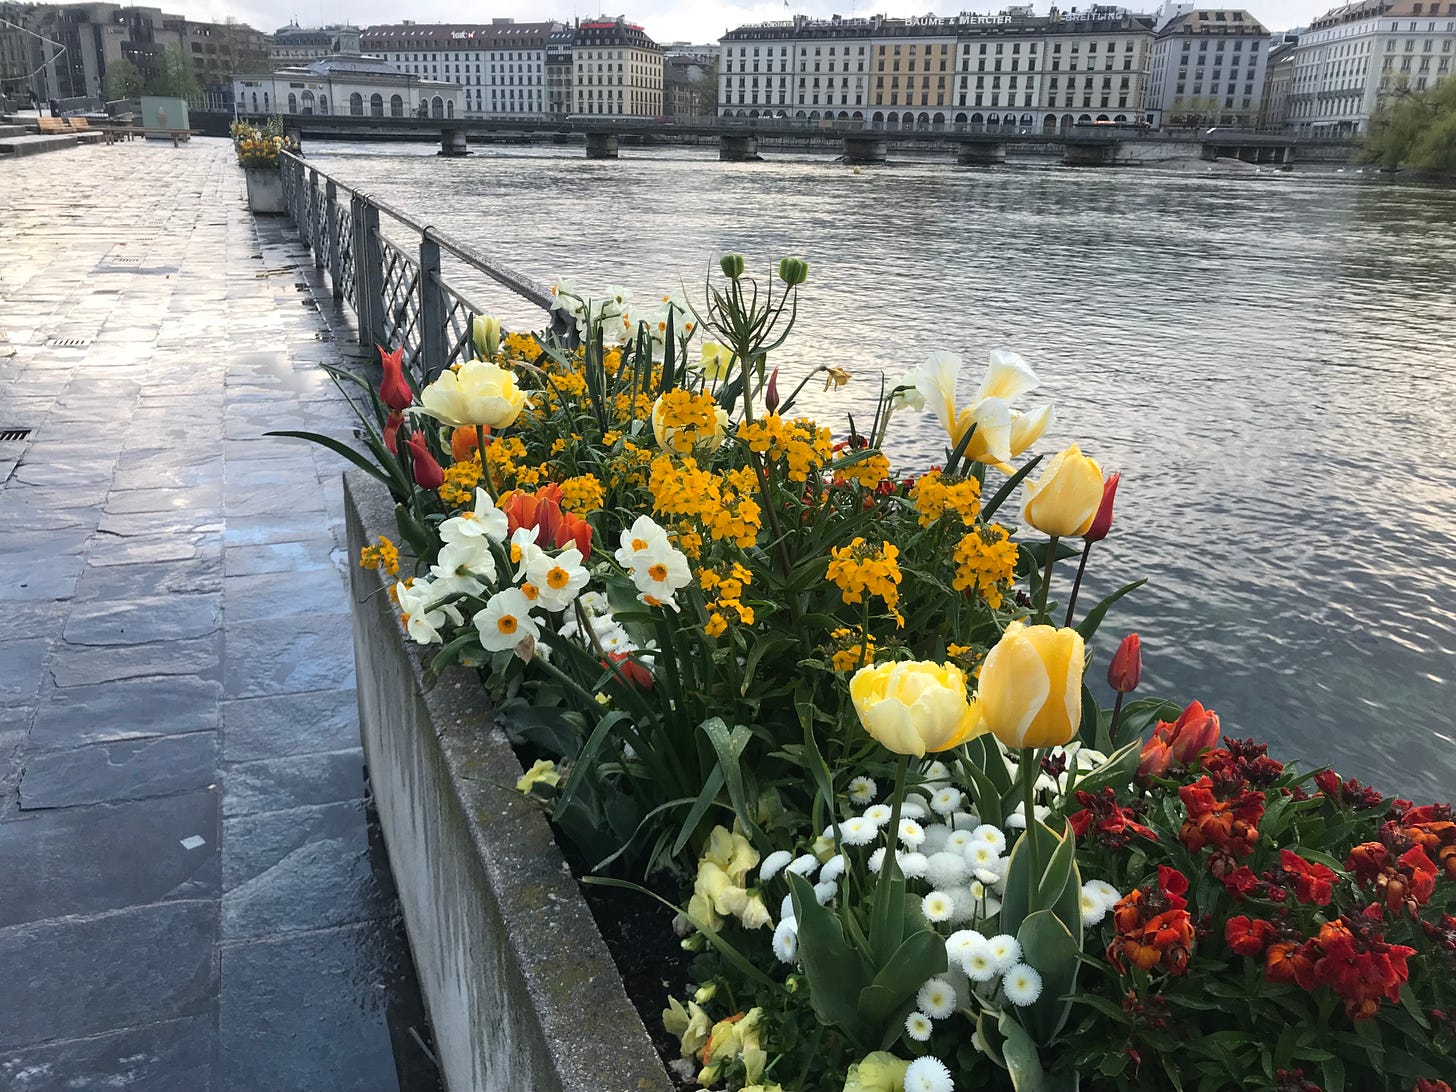 Bright flowers grow in planters alongside Lake Geneva in Geneva, Switzerland.